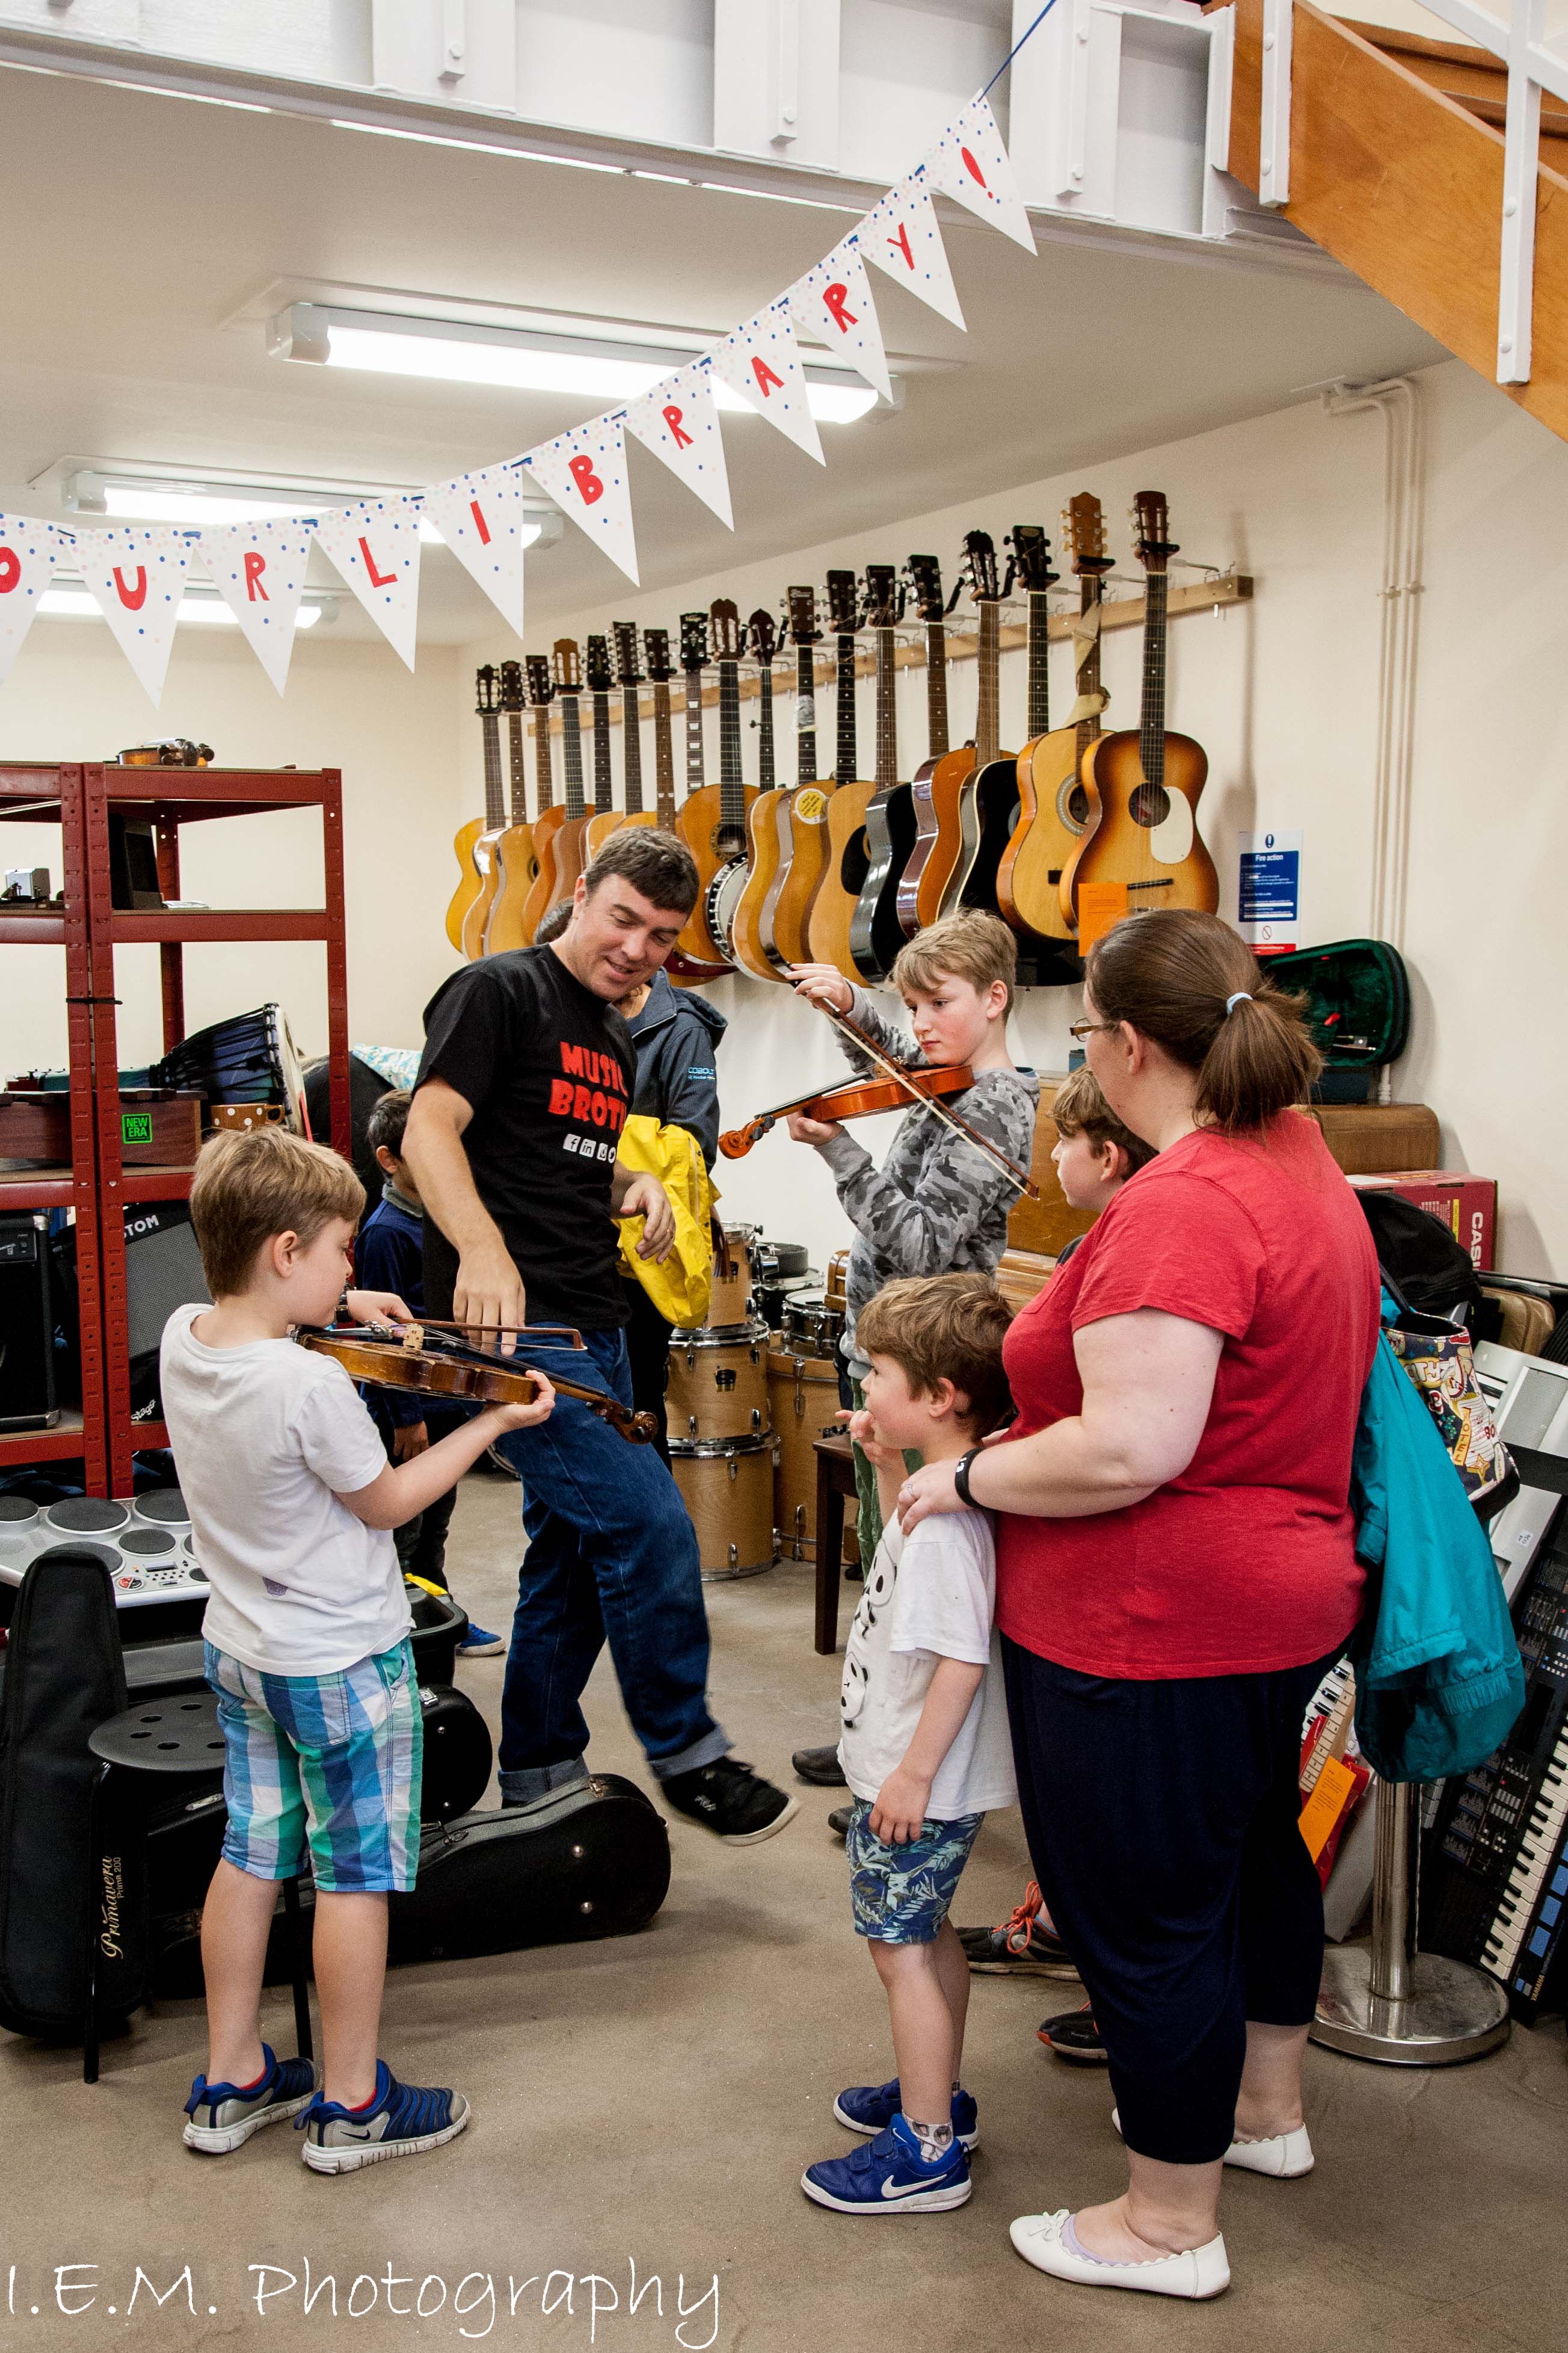 Renfrewshire music instrument library kept alive thanks to vital funding